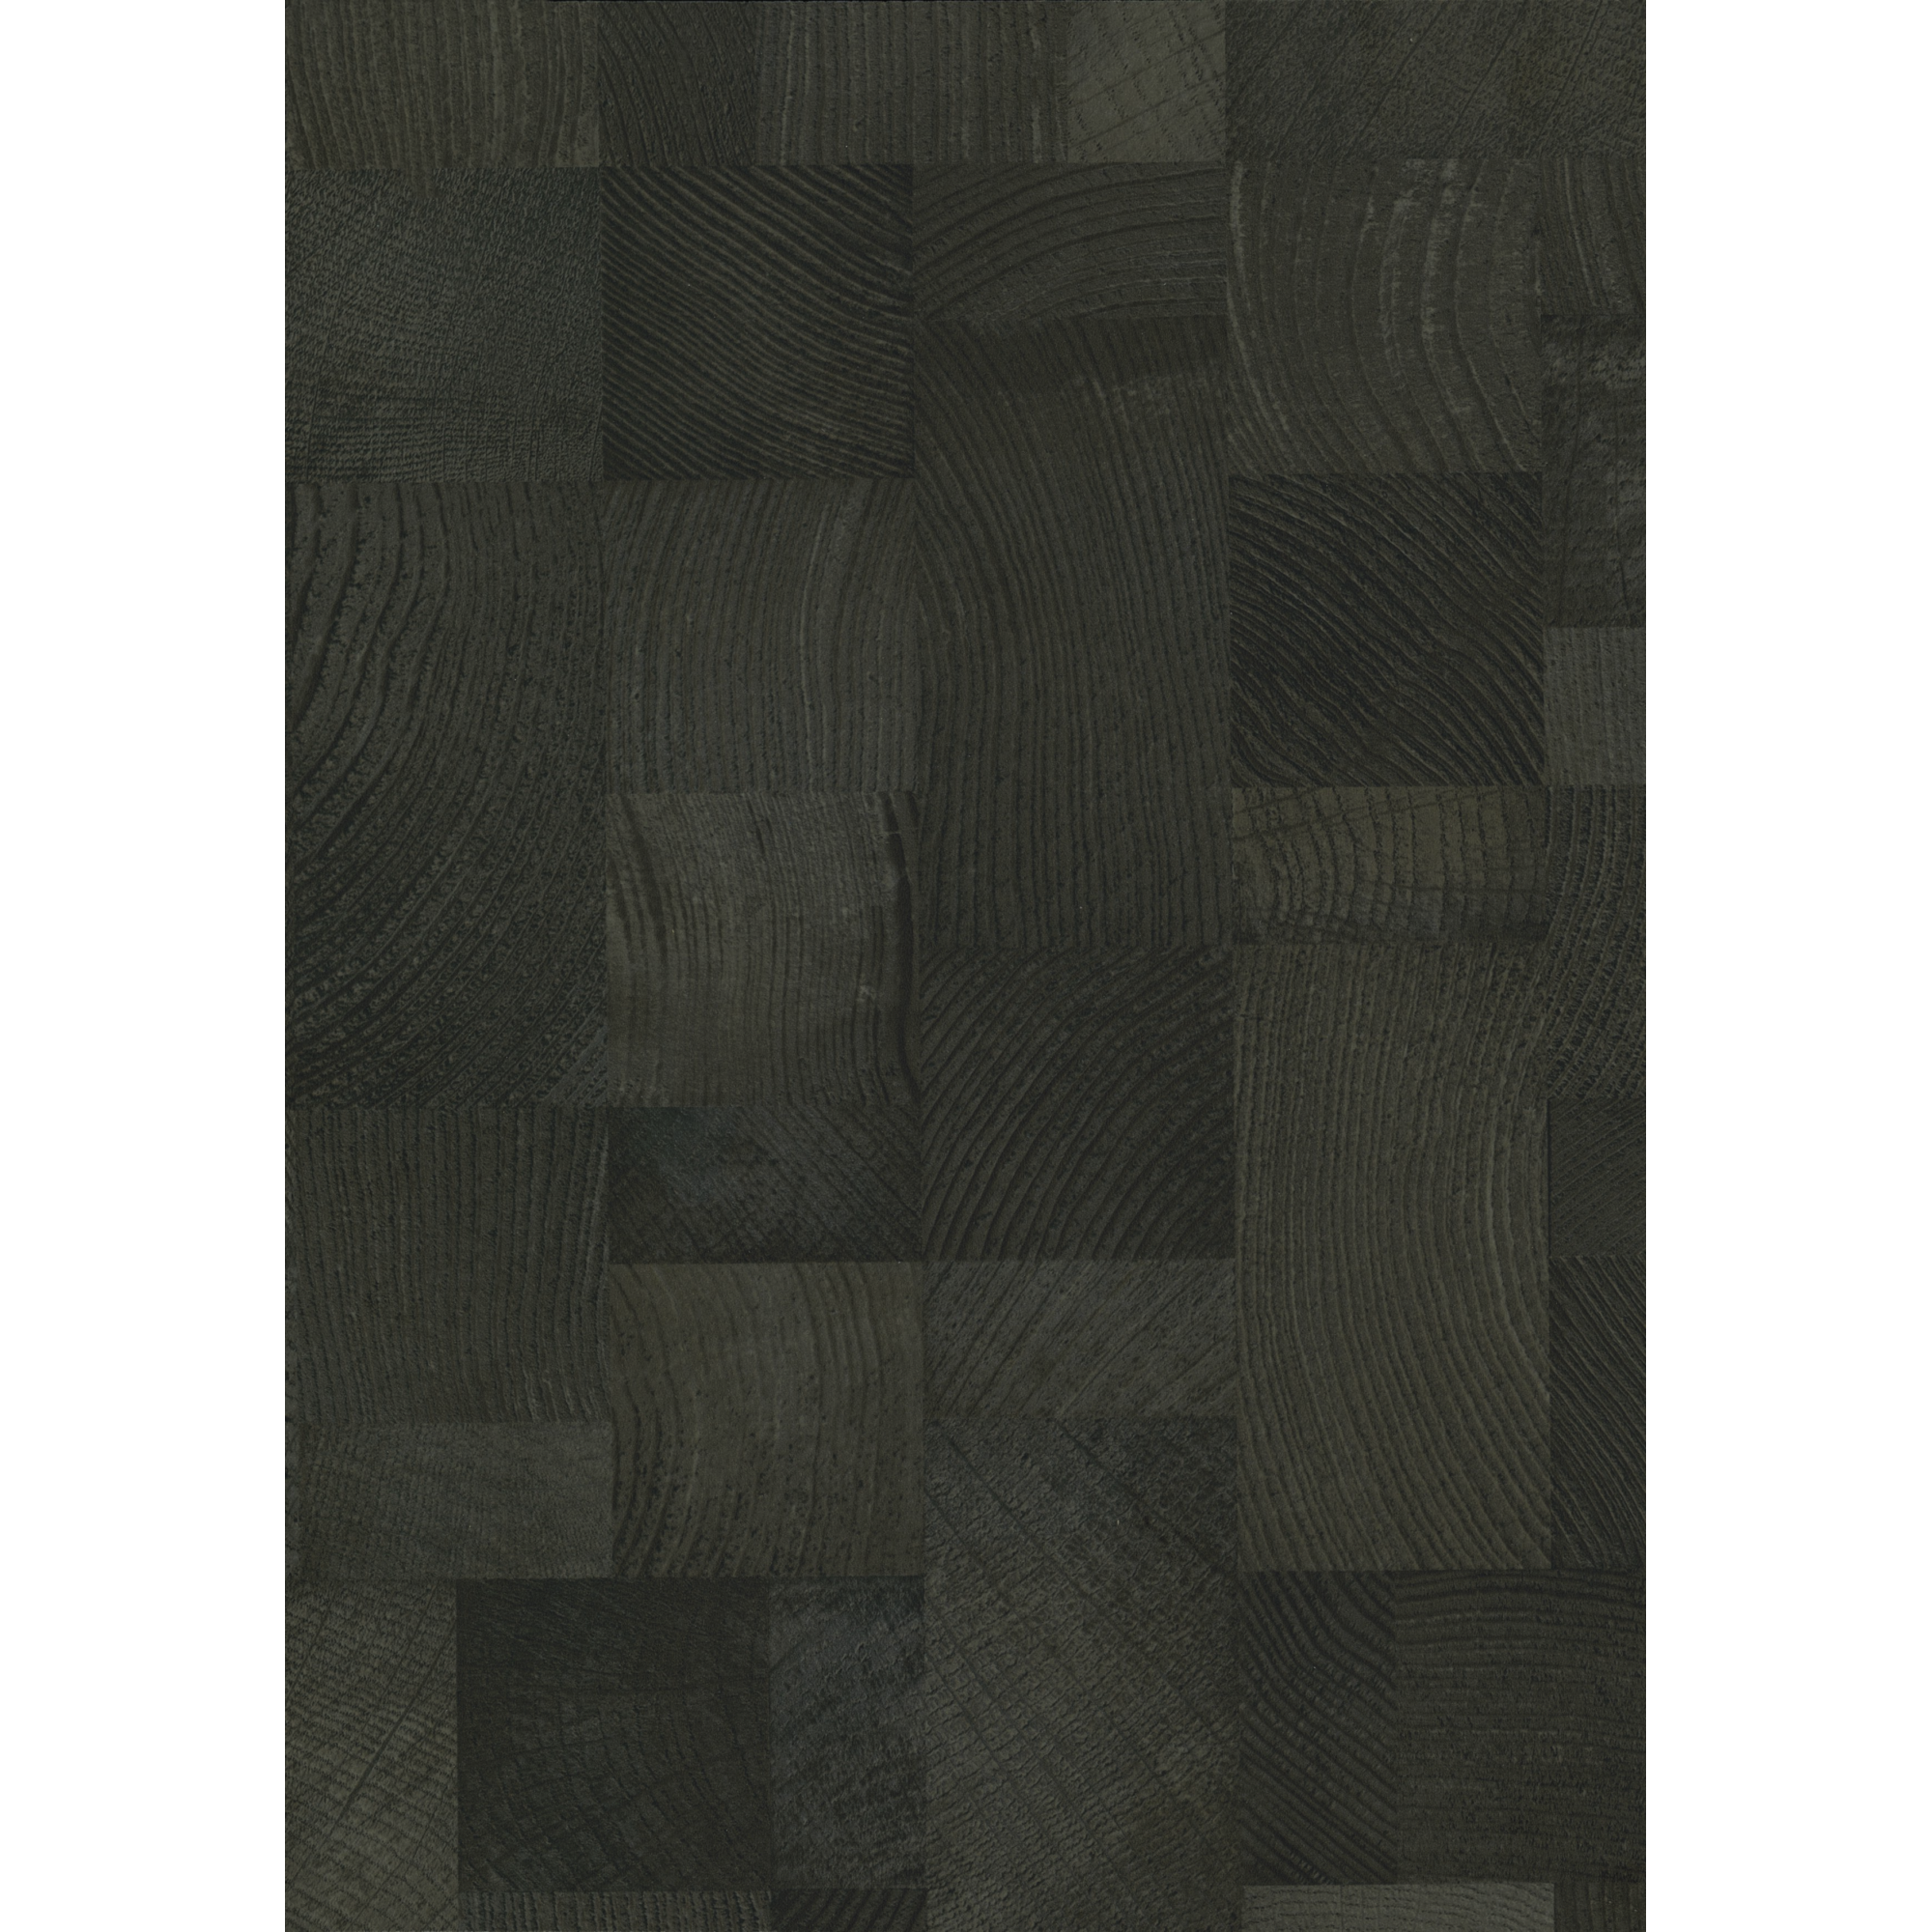 Dekorkante "GetaLit flex" Blockholz schwarz 650 x 44 x 0,3 mm 2 Stück + product picture